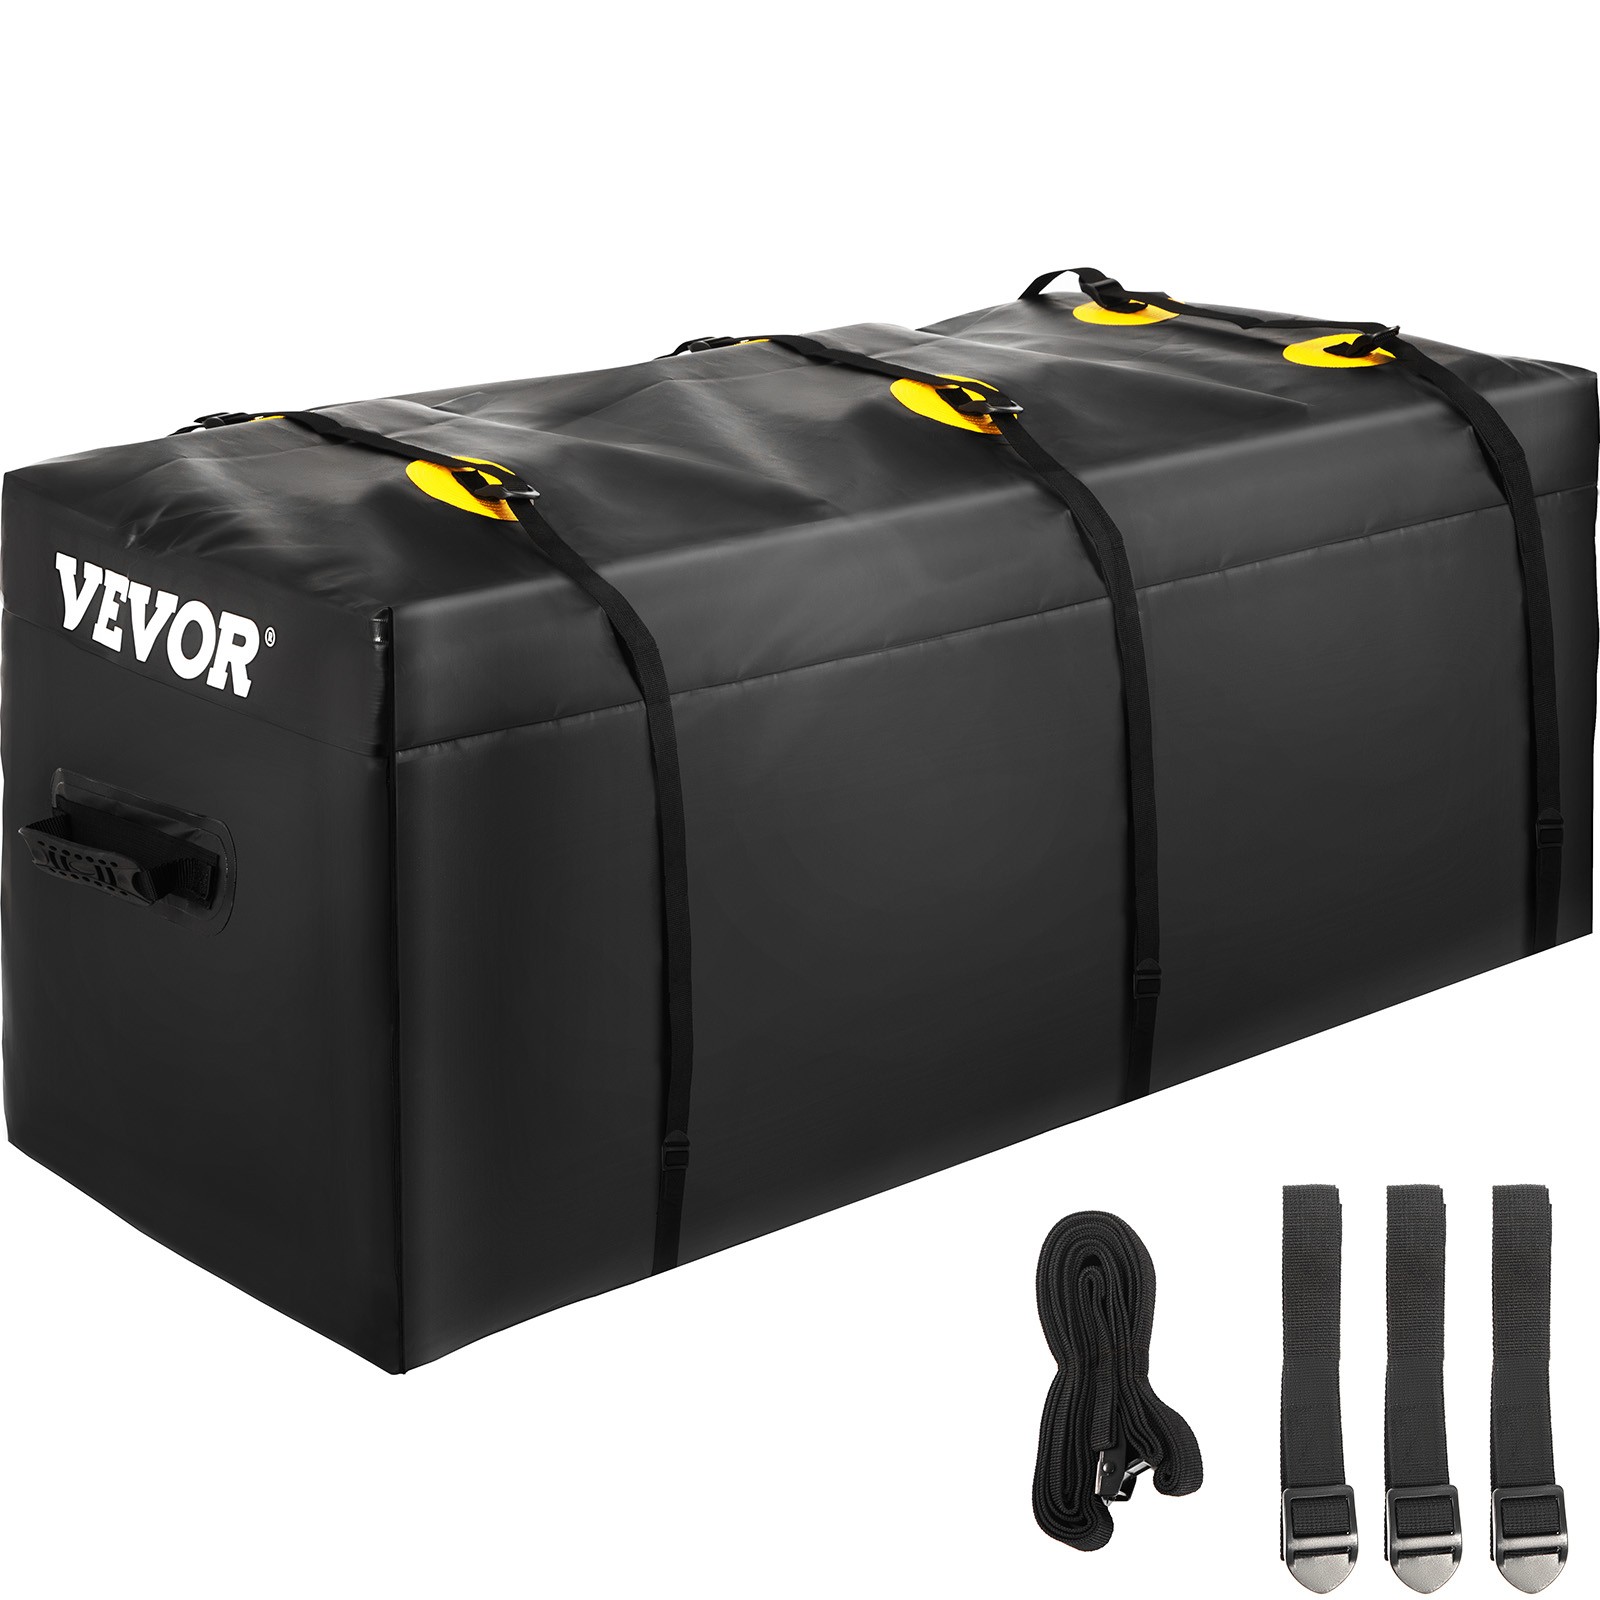 VEVOR Cargo Carrier Bag Car Luggage Storage Hitch Mount Waterproof 20 Cubic Q592424600D20J0GPV0